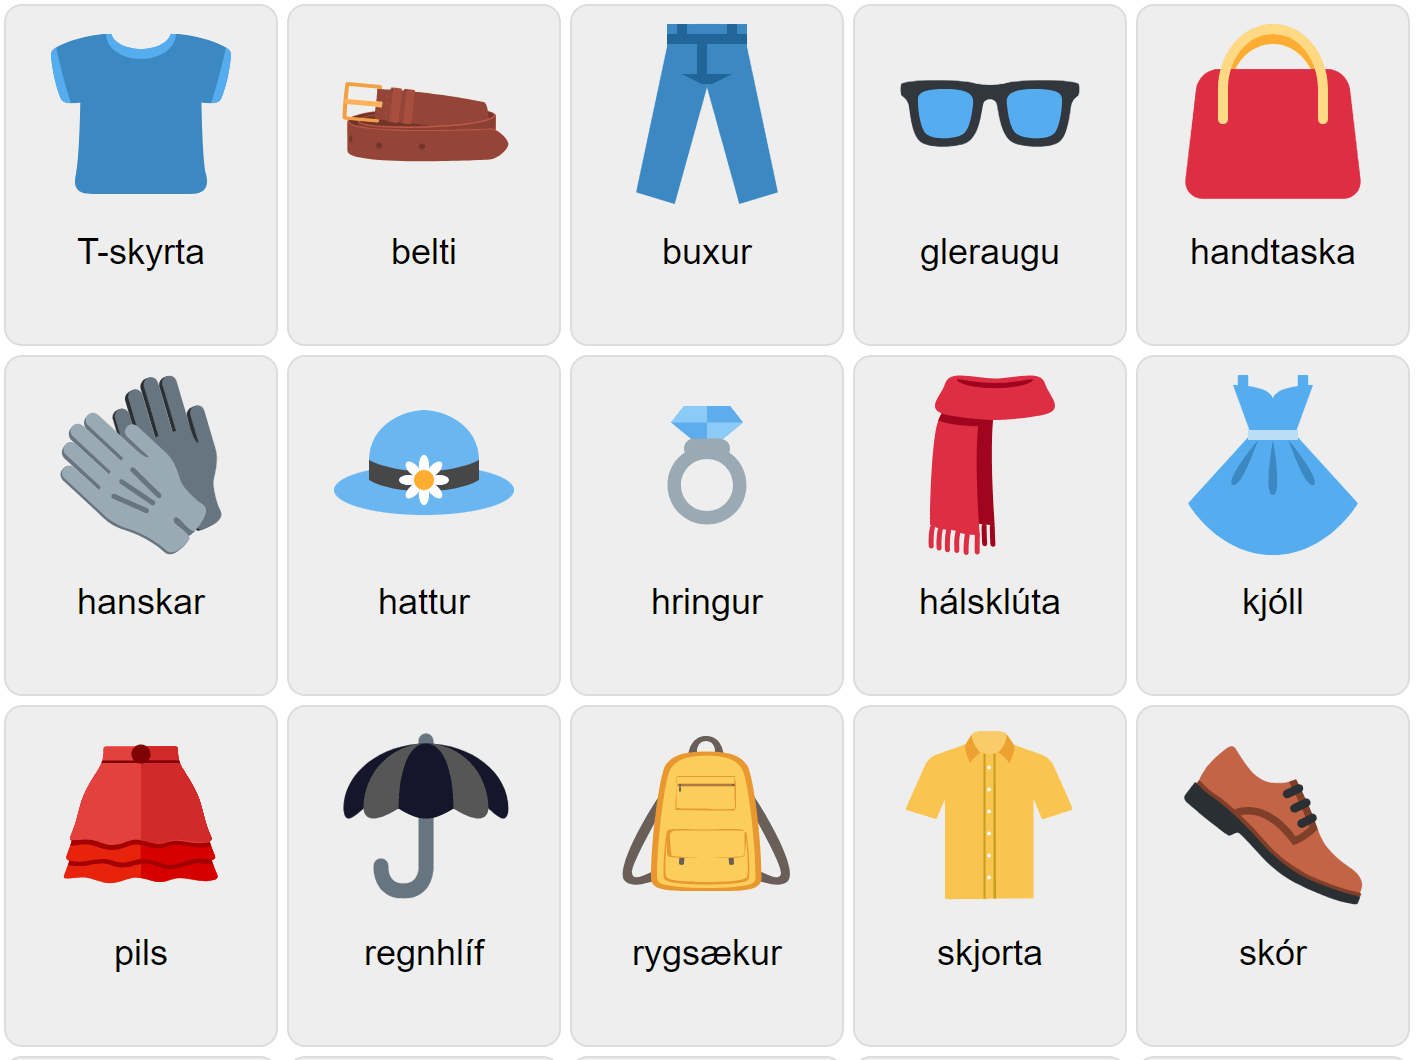 Clothes in Icelandic